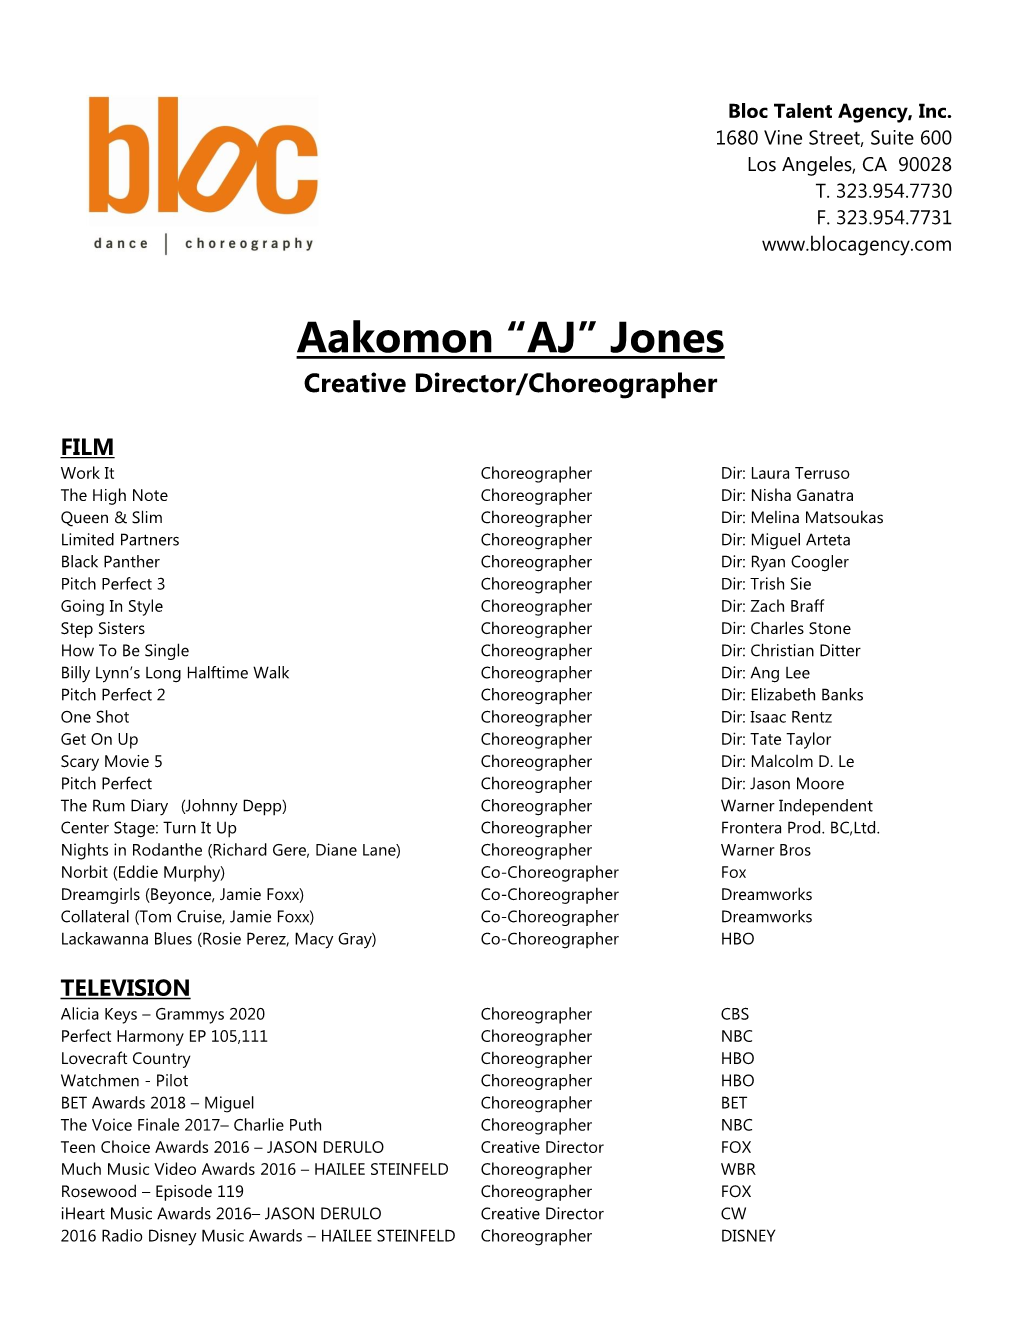 Aakomon “AJ” Jones Creative Director/Choreographer